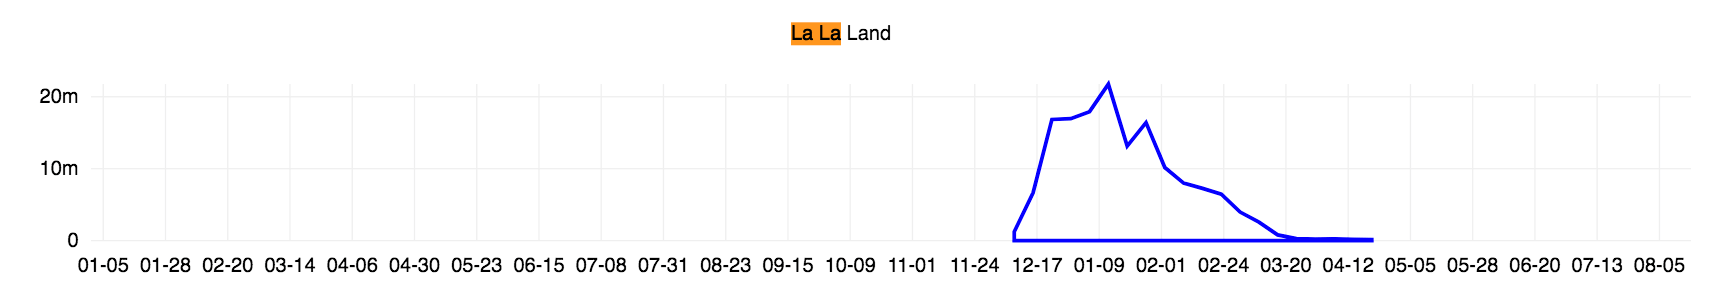 la-la-land